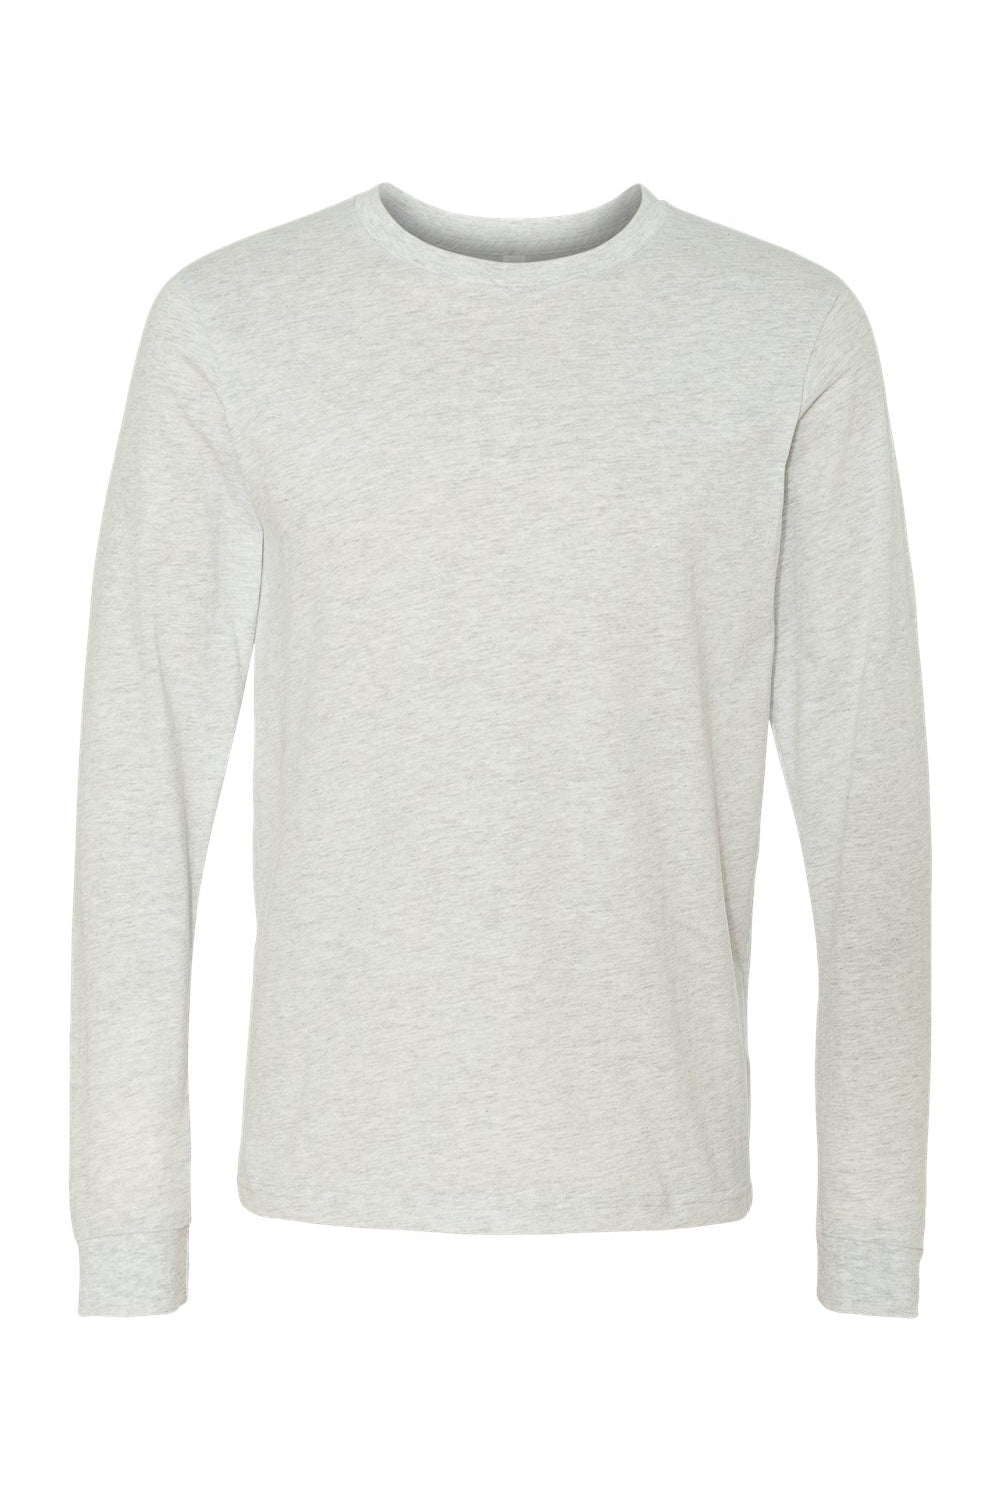 Bella + Canvas BC3501/3501 Mens Jersey Long Sleeve Crewneck T-Shirt Ash Grey Flat Front